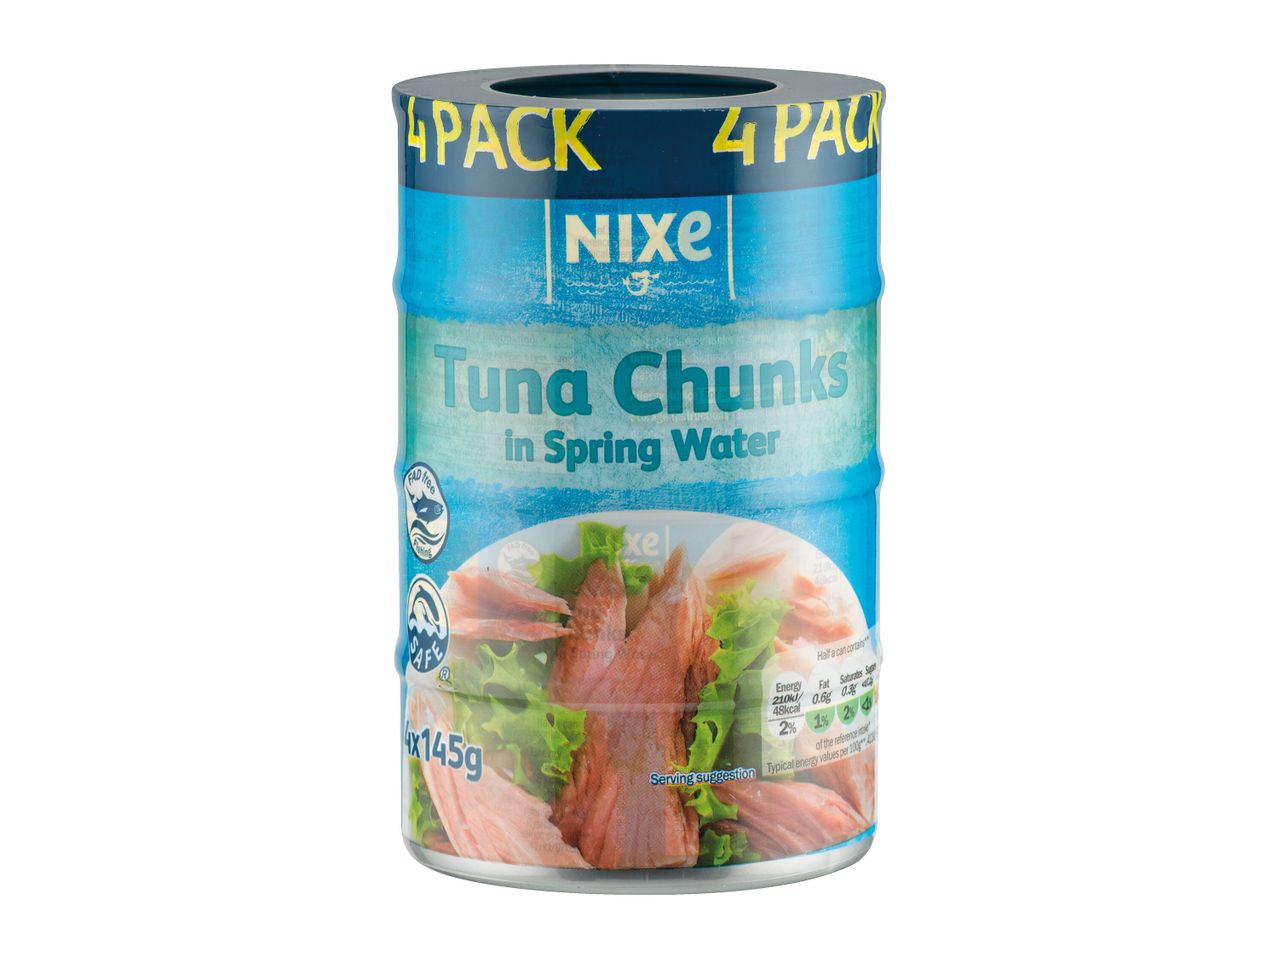 Go to full screen view: Nixe Tuna Chunks in Spring Water - Image 1